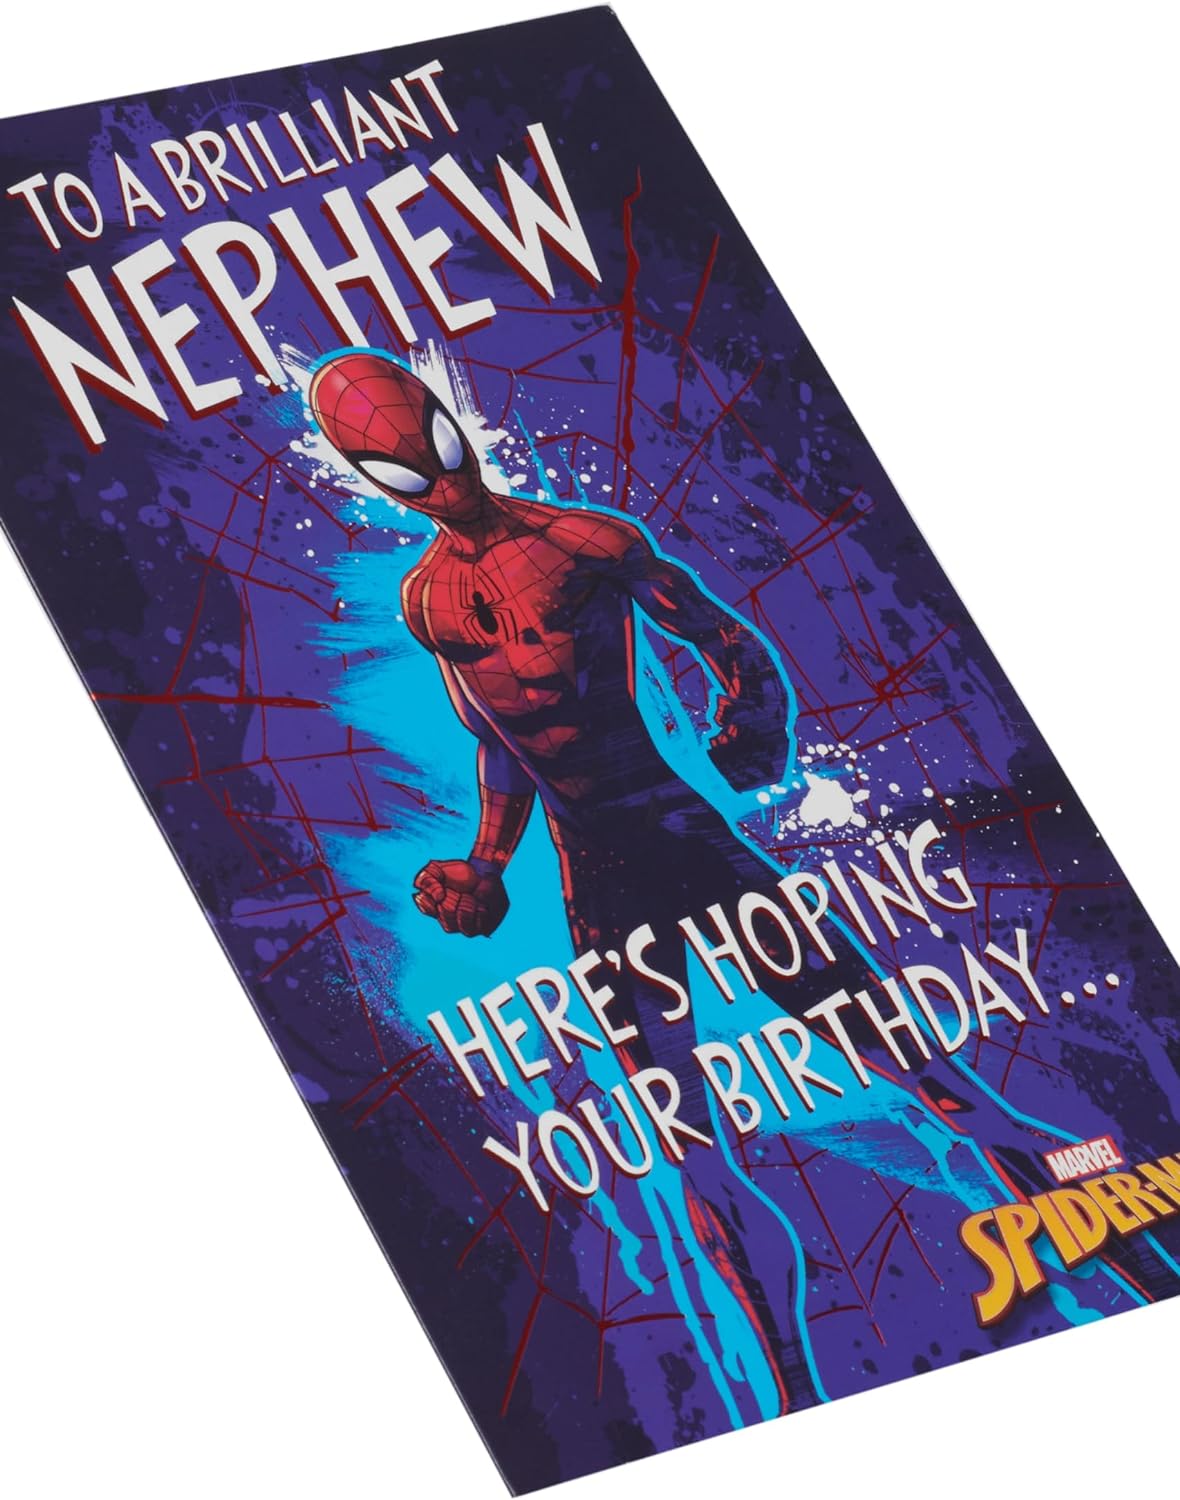 Marvel Spider Man Bold Design Nephew Birthday Card